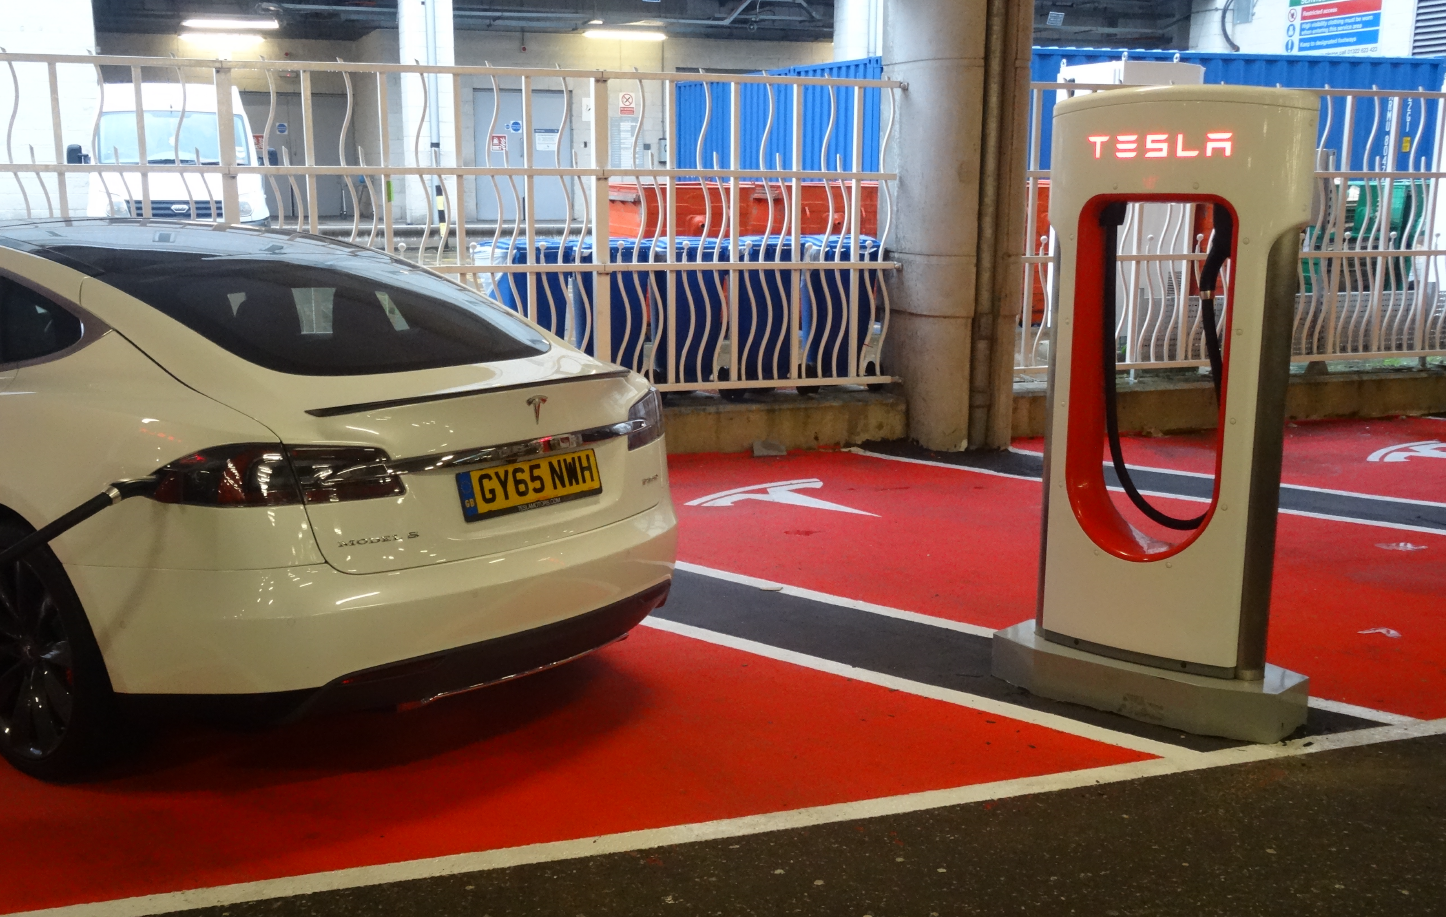 Tesla Charging Bays Installed at Bluewater Car Park